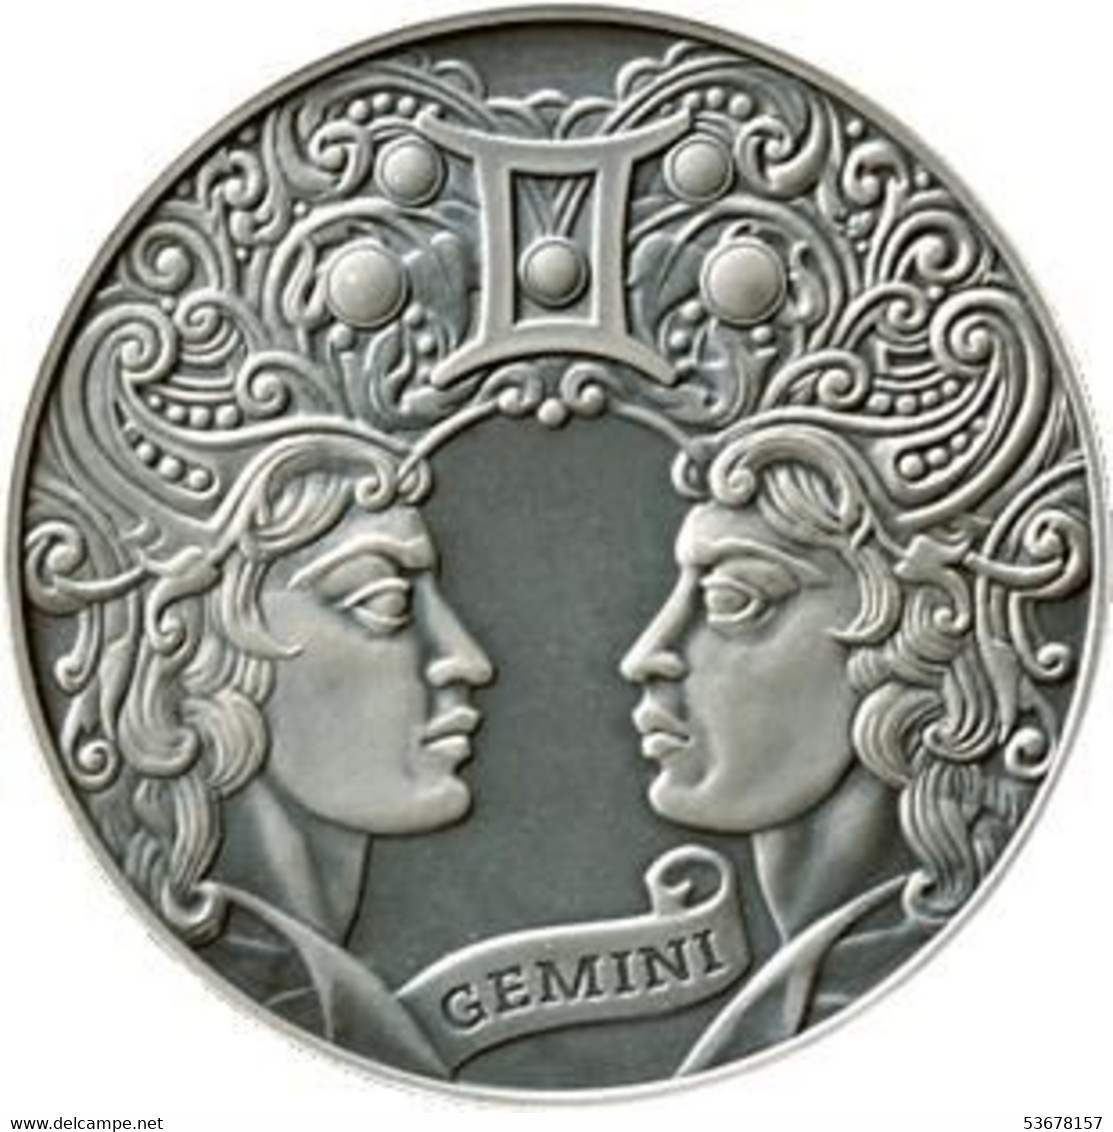 Belarus - Rouble, 2014, GEMINI - Zodiac Horoscope, Unc - Belarus